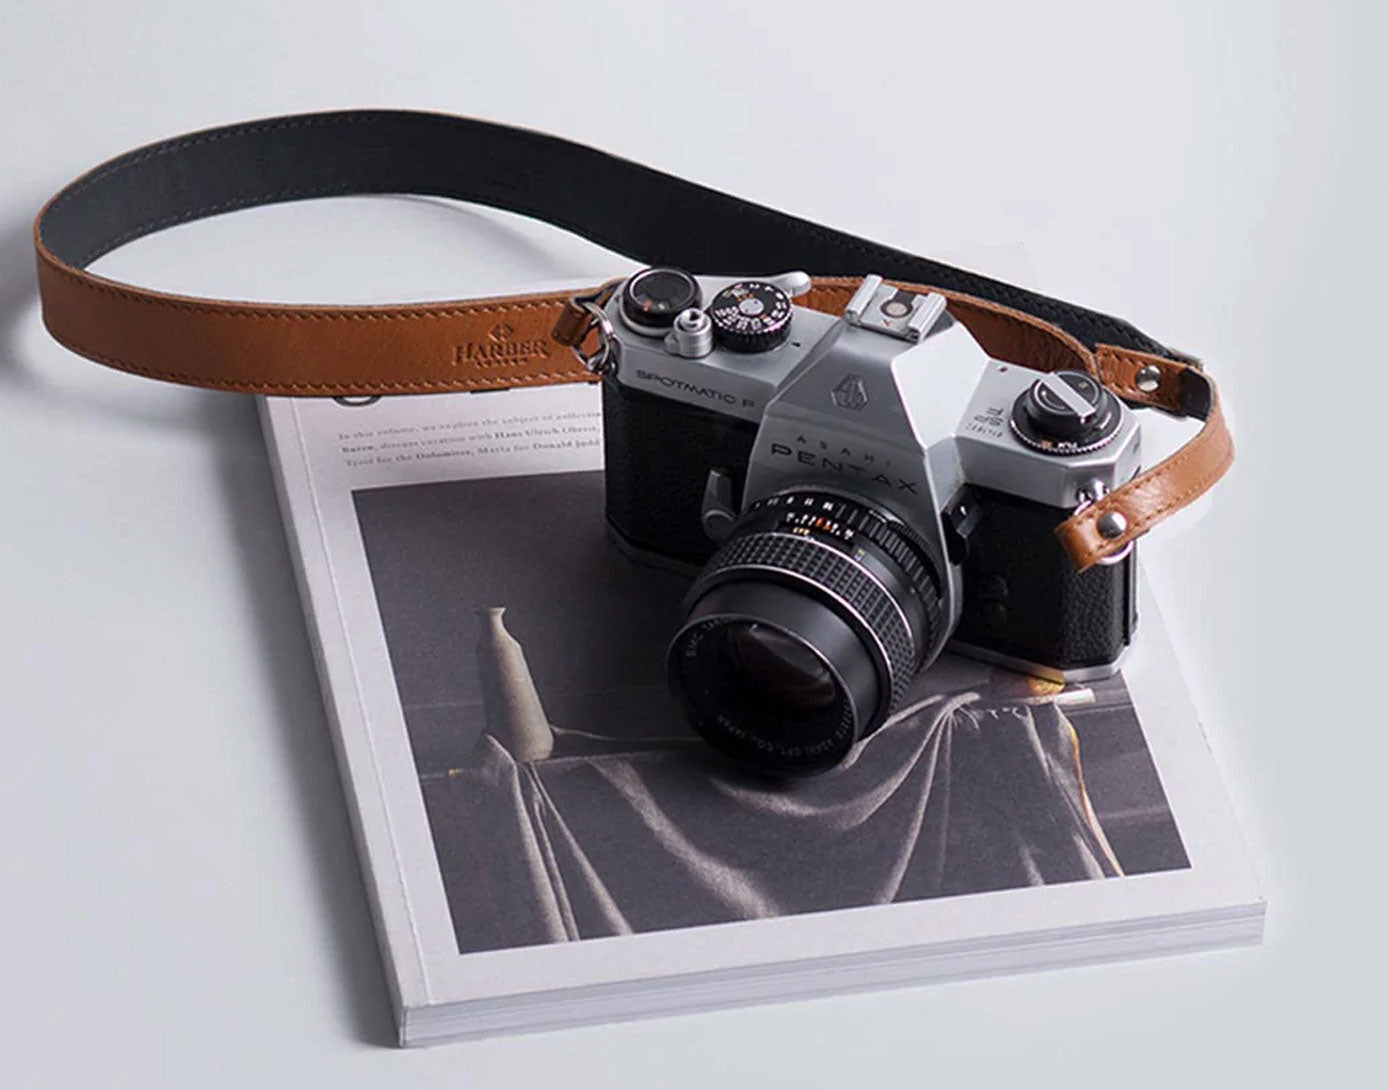 Leather camera straps